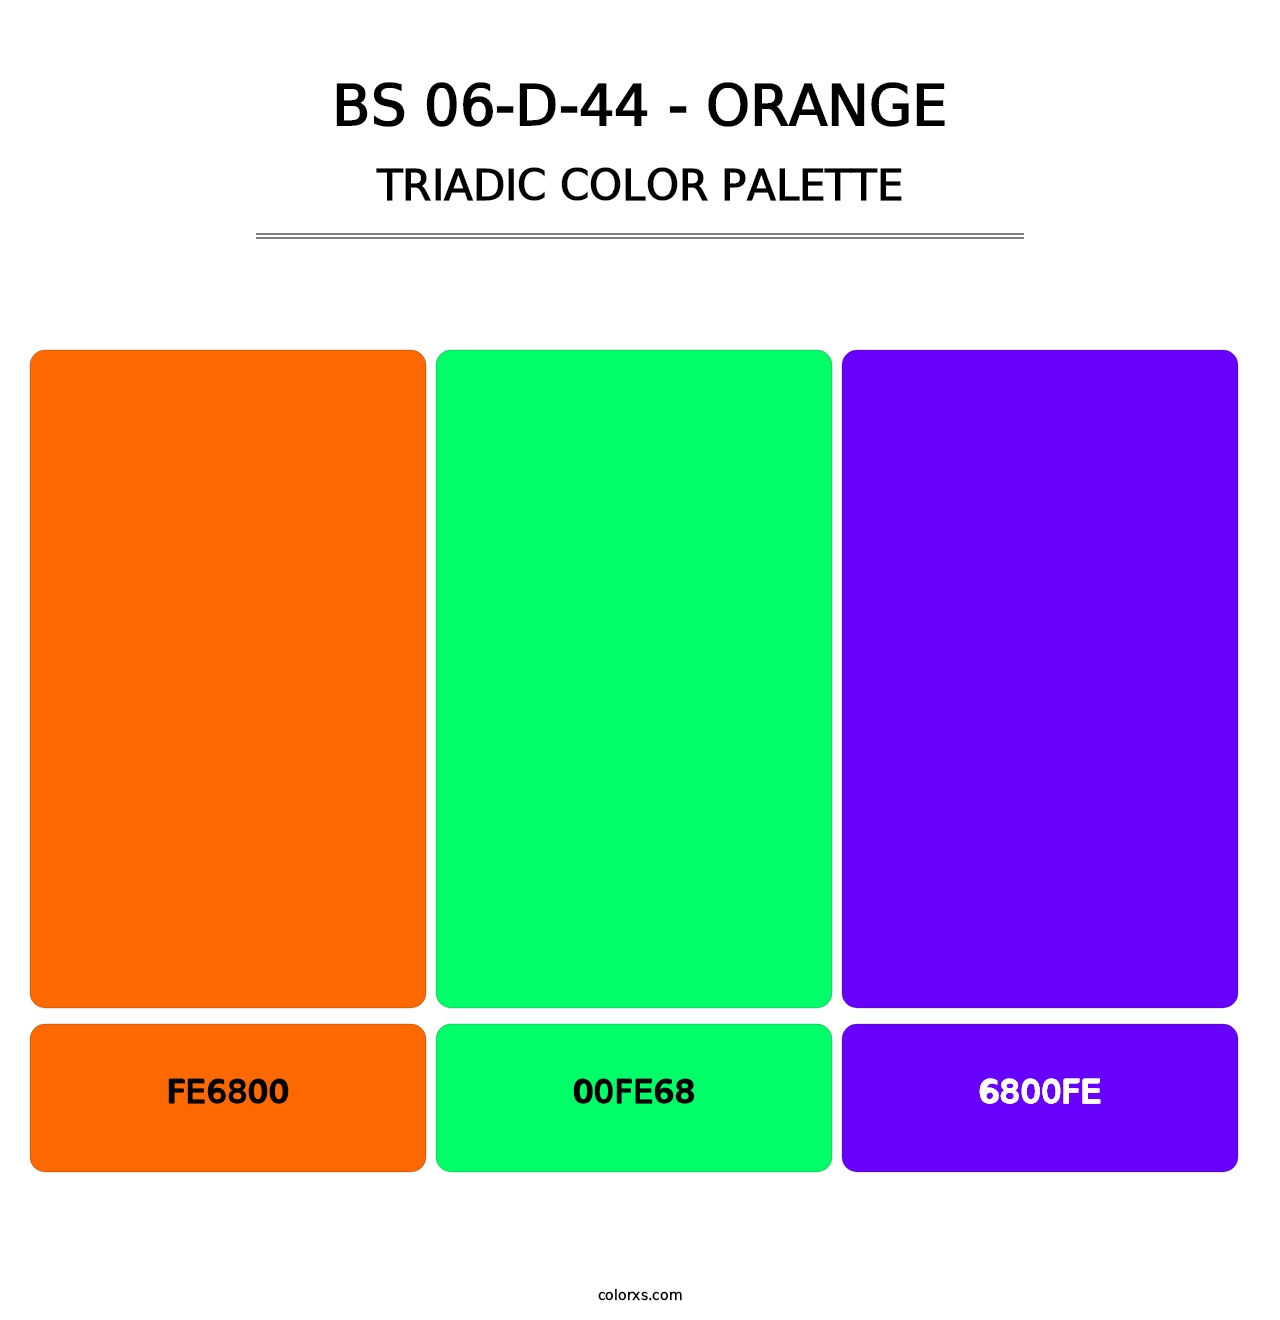 BS 06-D-44 - Orange - Triadic Color Palette